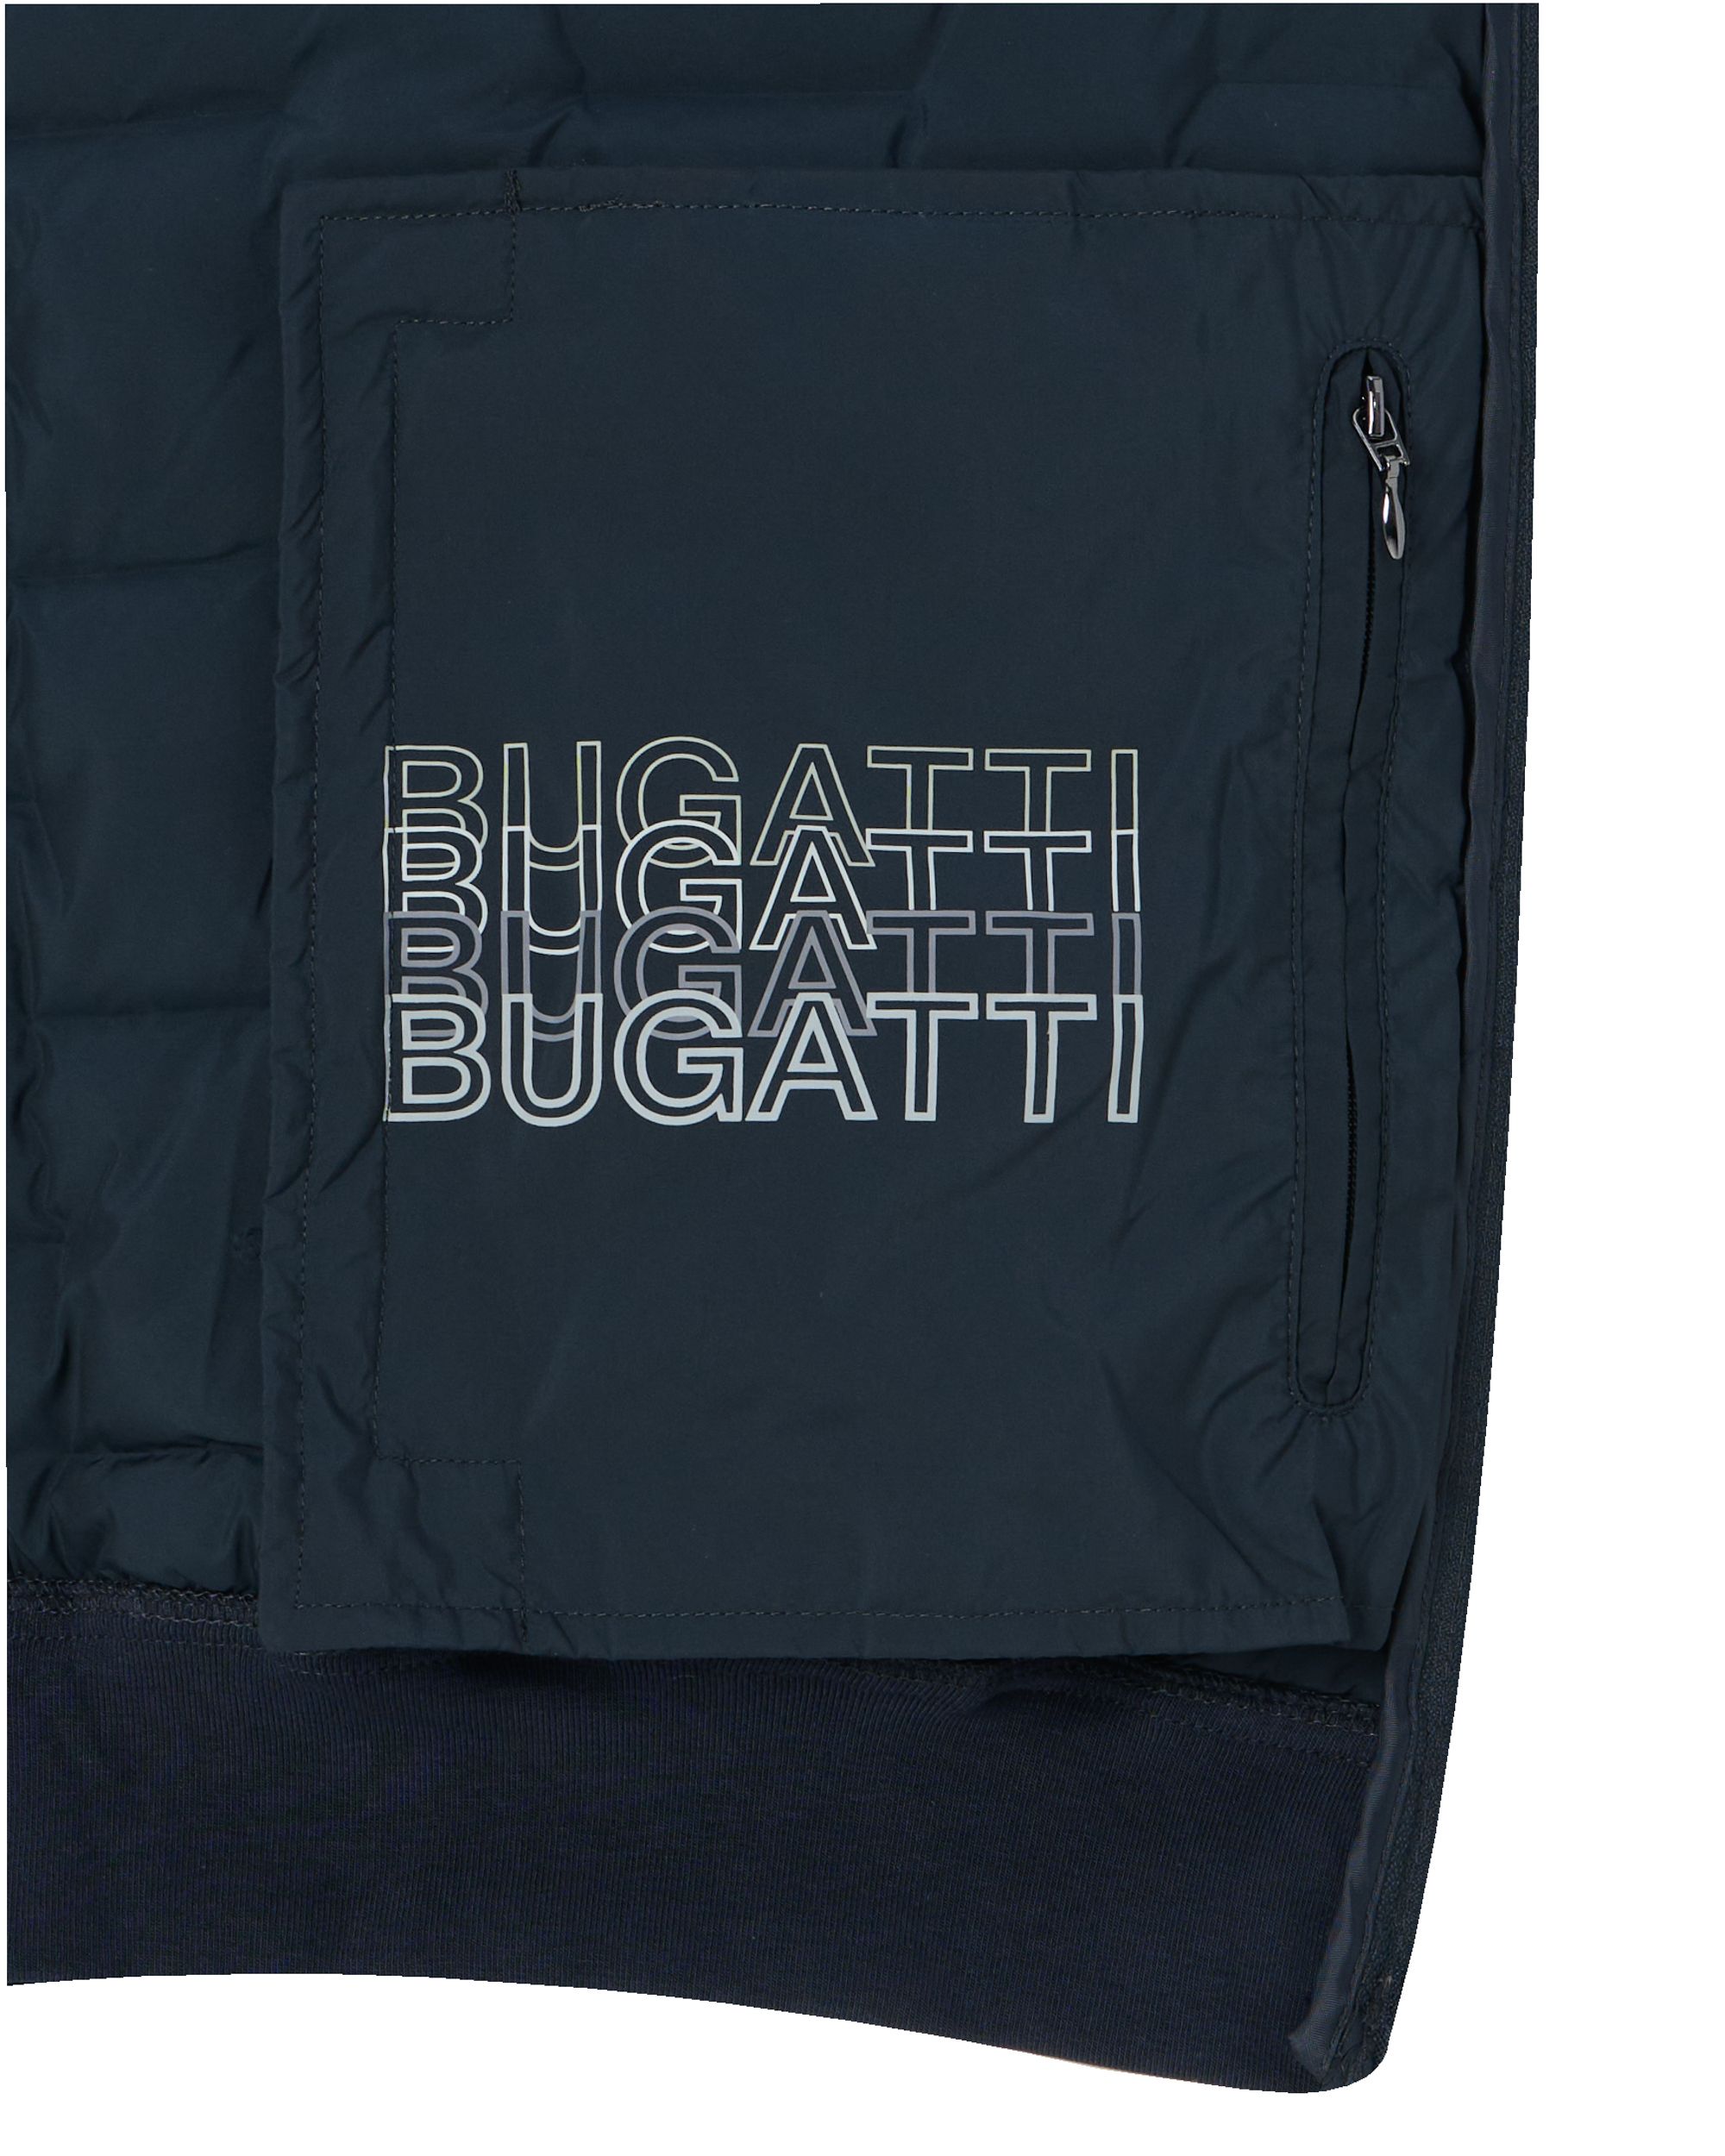 Bugatti clothing Vest Donker blauw 094537-001-L